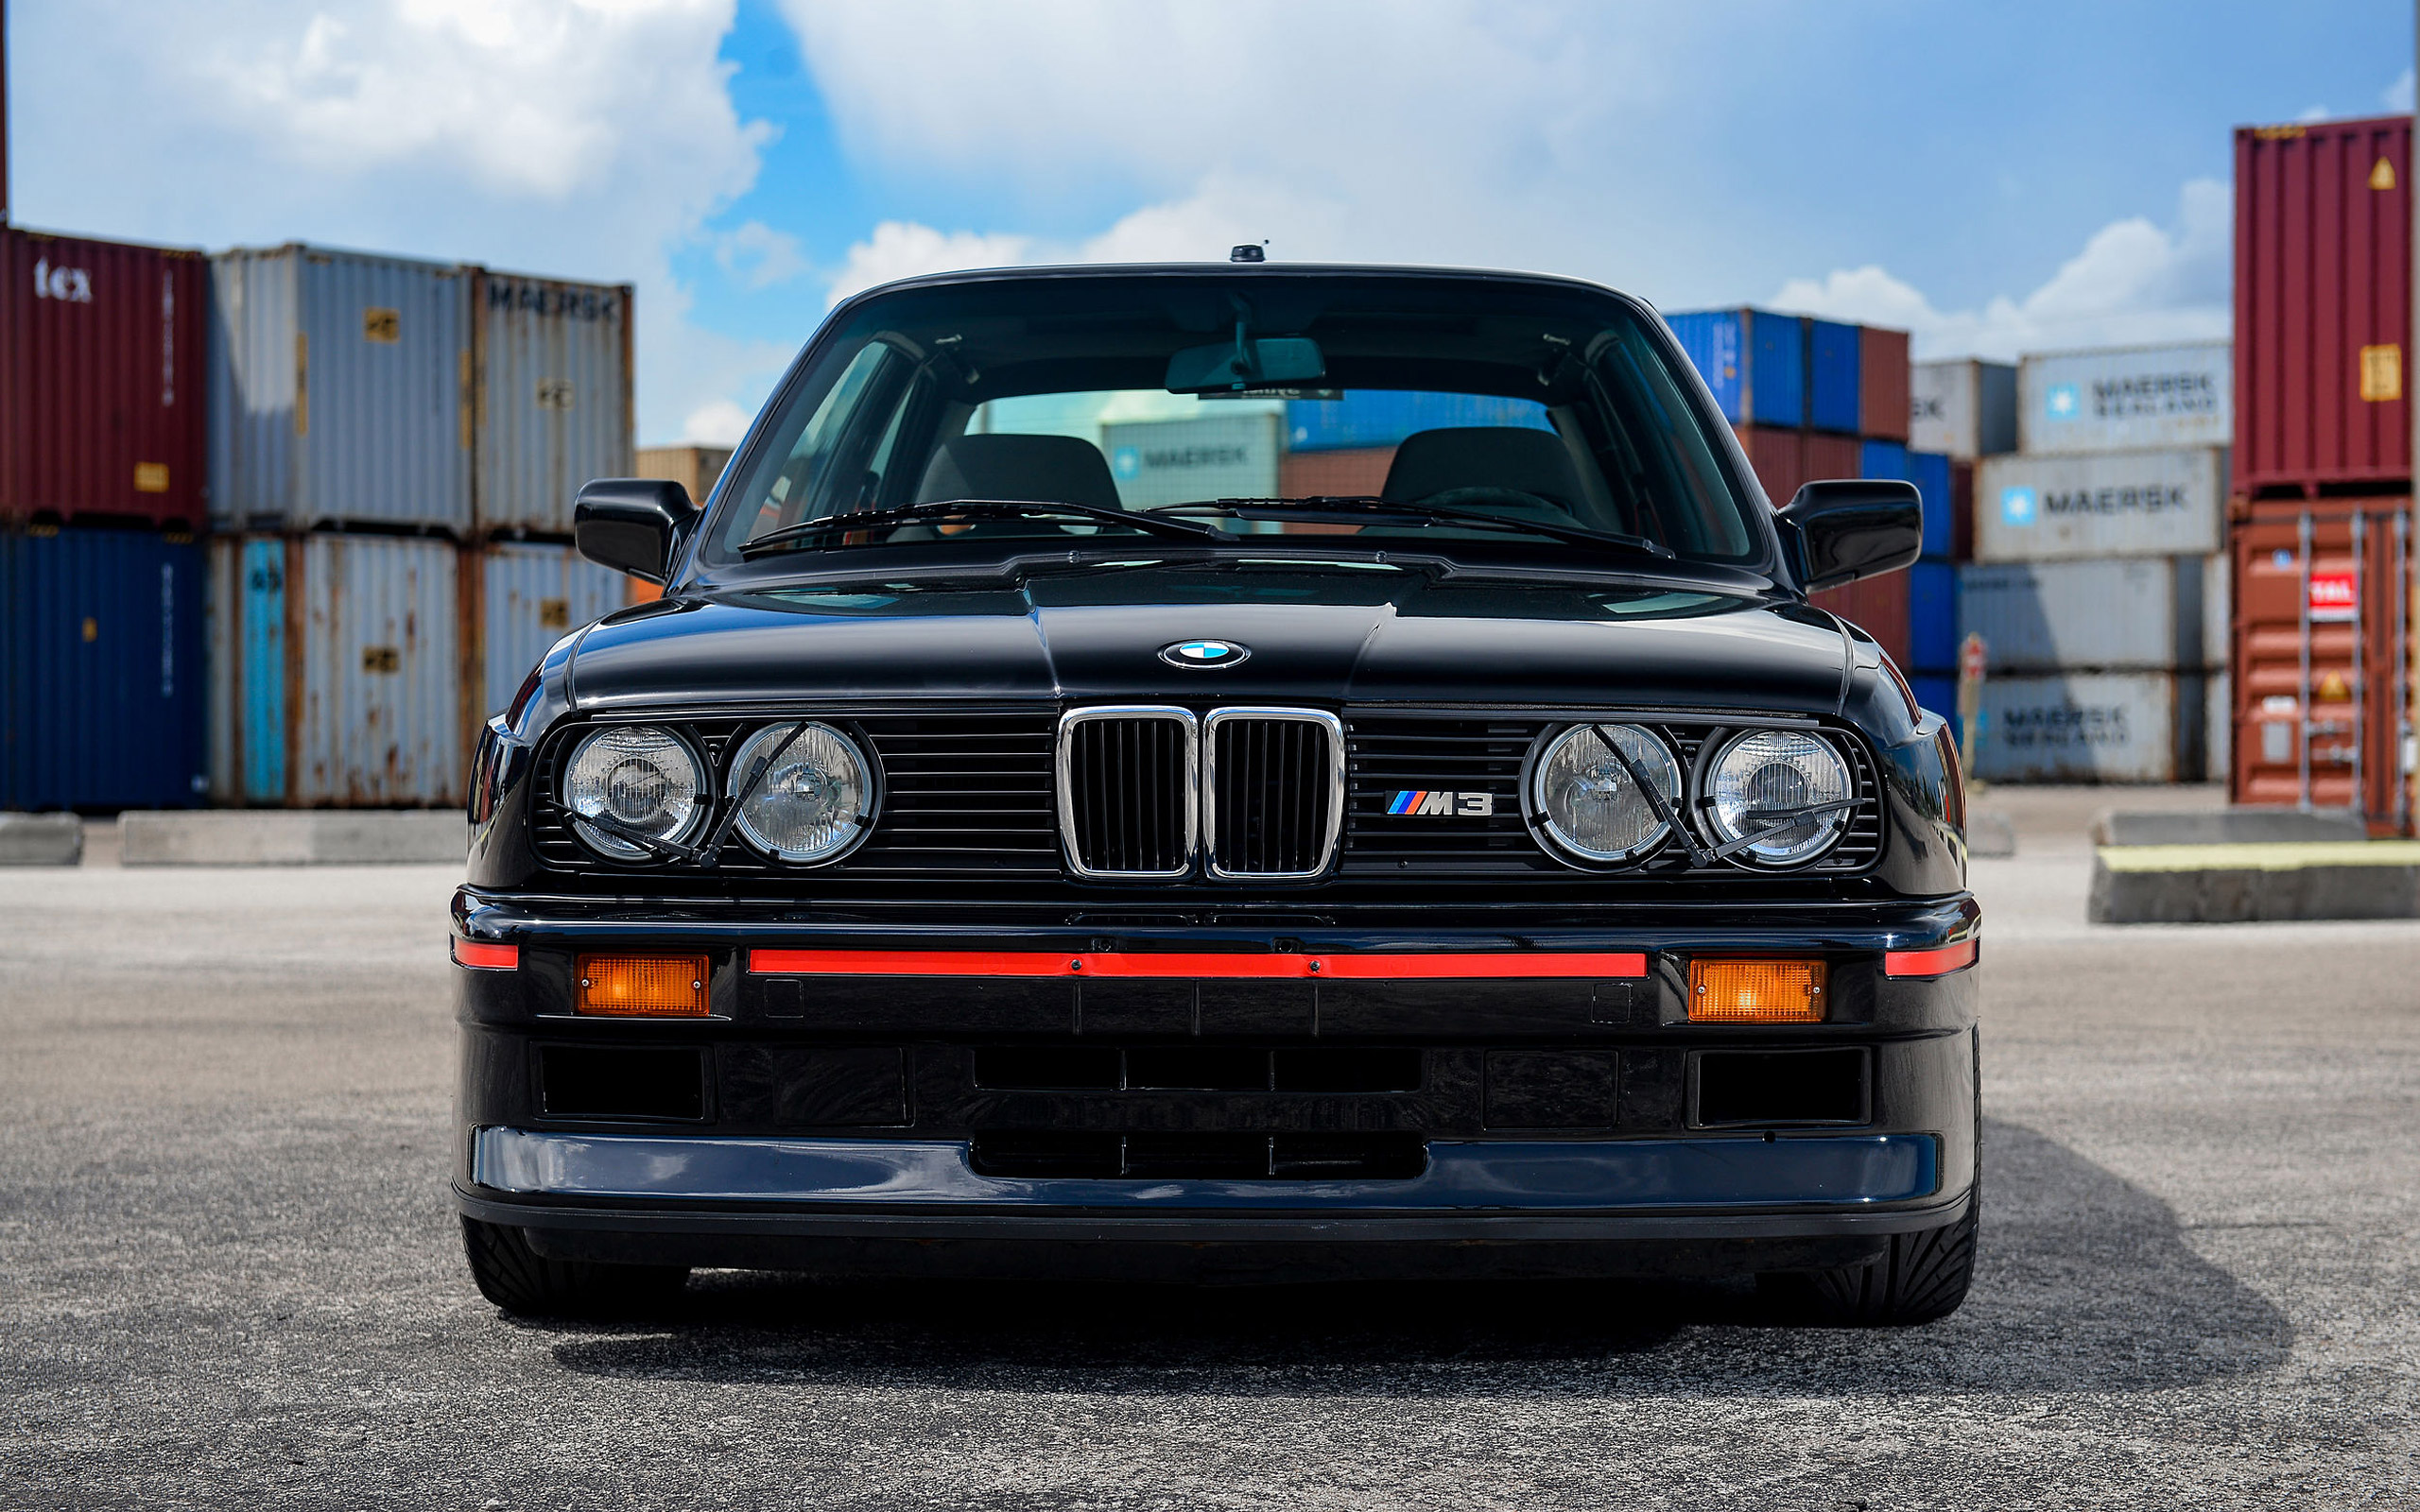  1989 BMW M3 Sport Evolution Wallpaper.